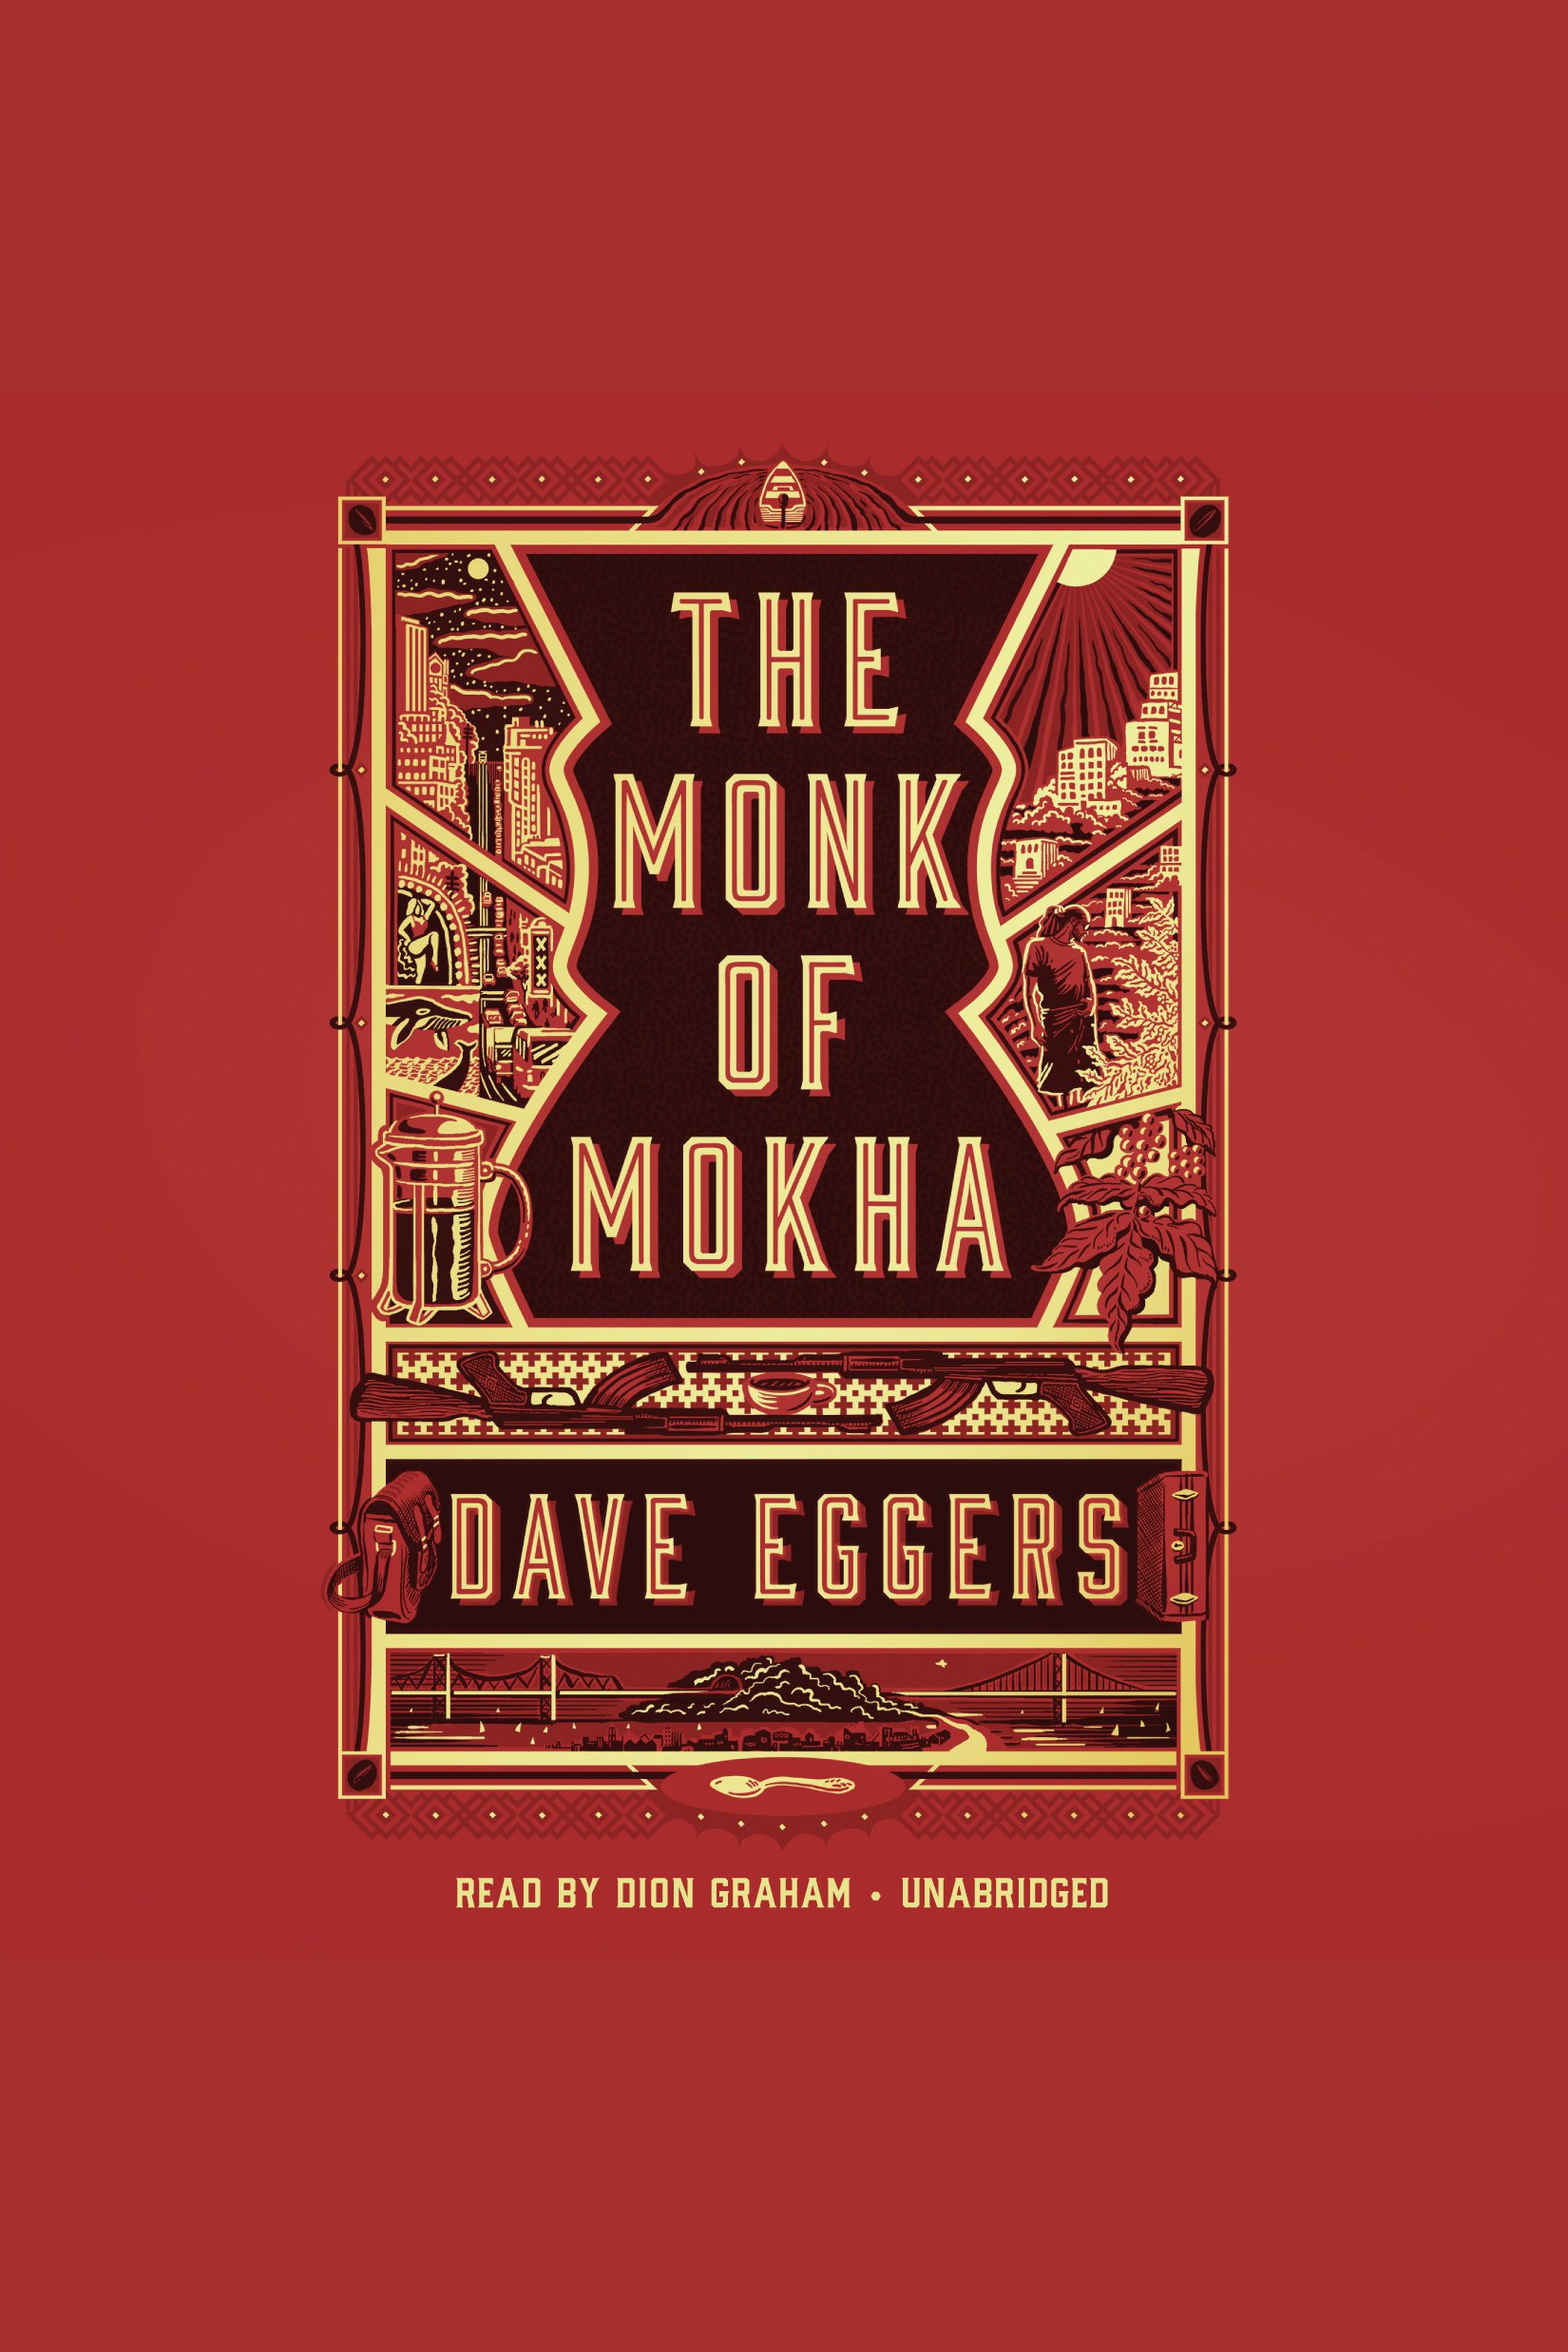 The monk of Mokha cover image